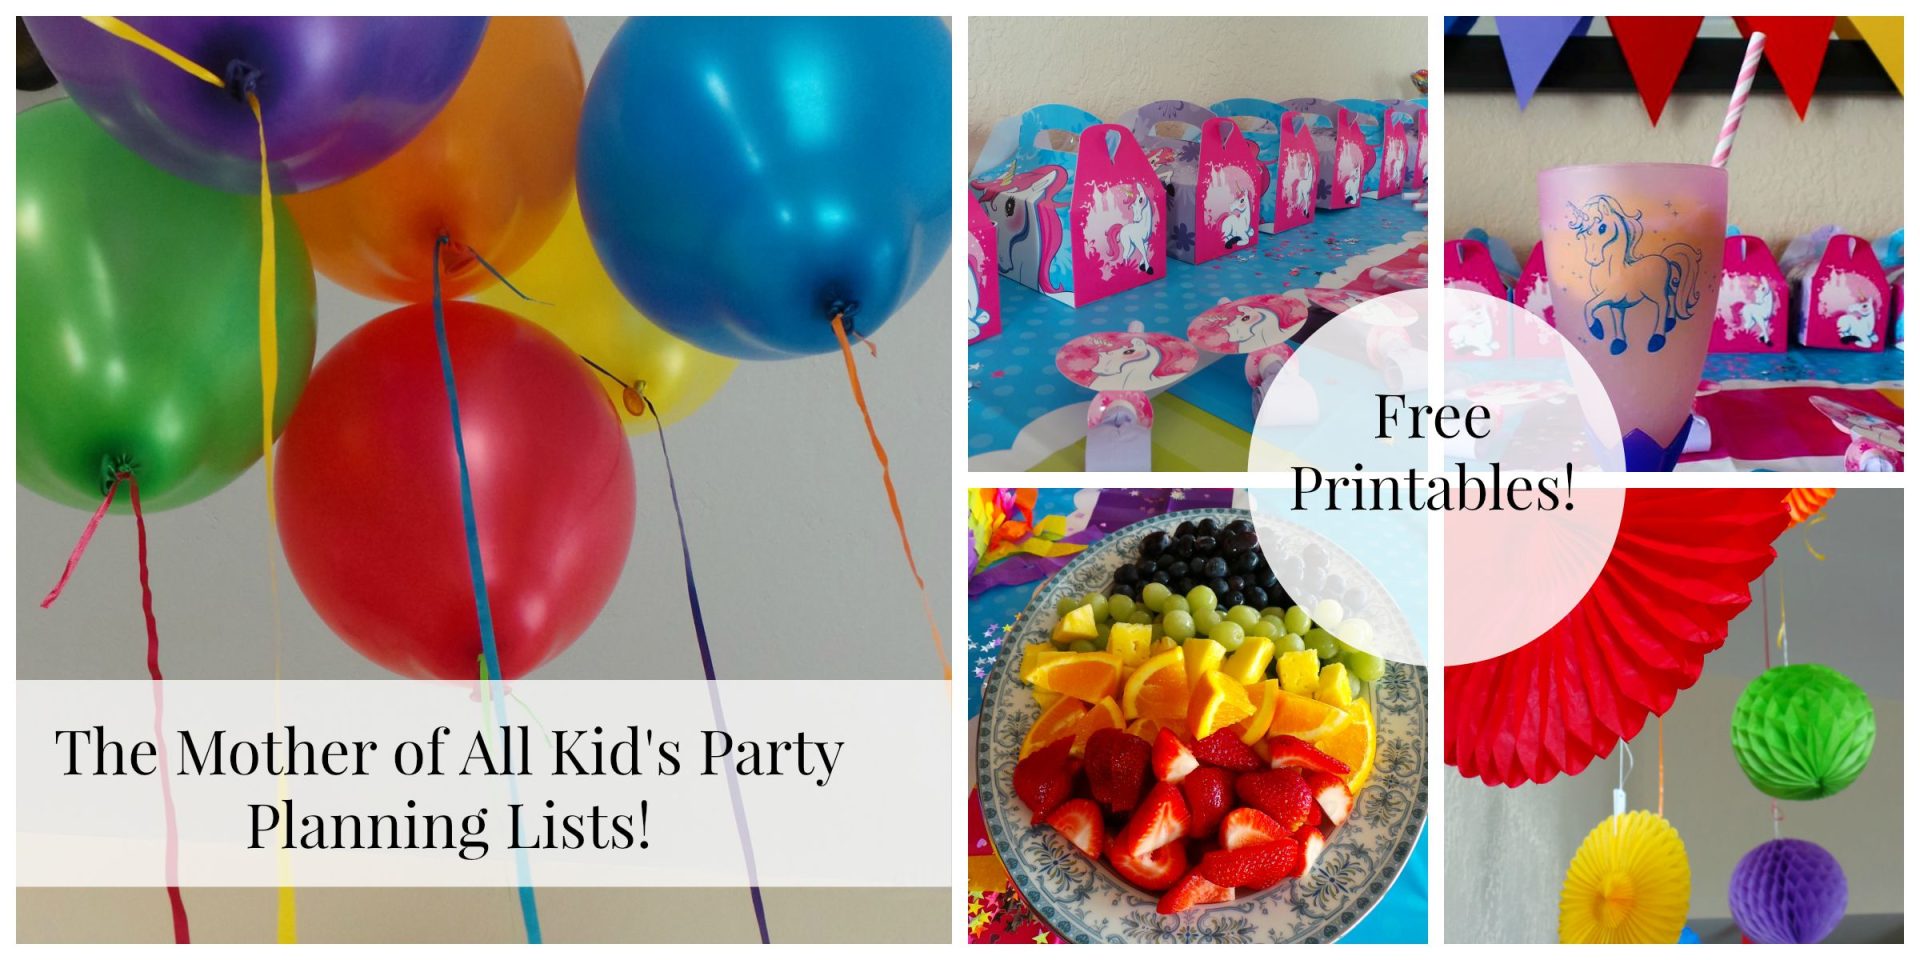 Kids birthday party checklist  Birthday party checklist, Party planning  checklist, Toddler birthday party